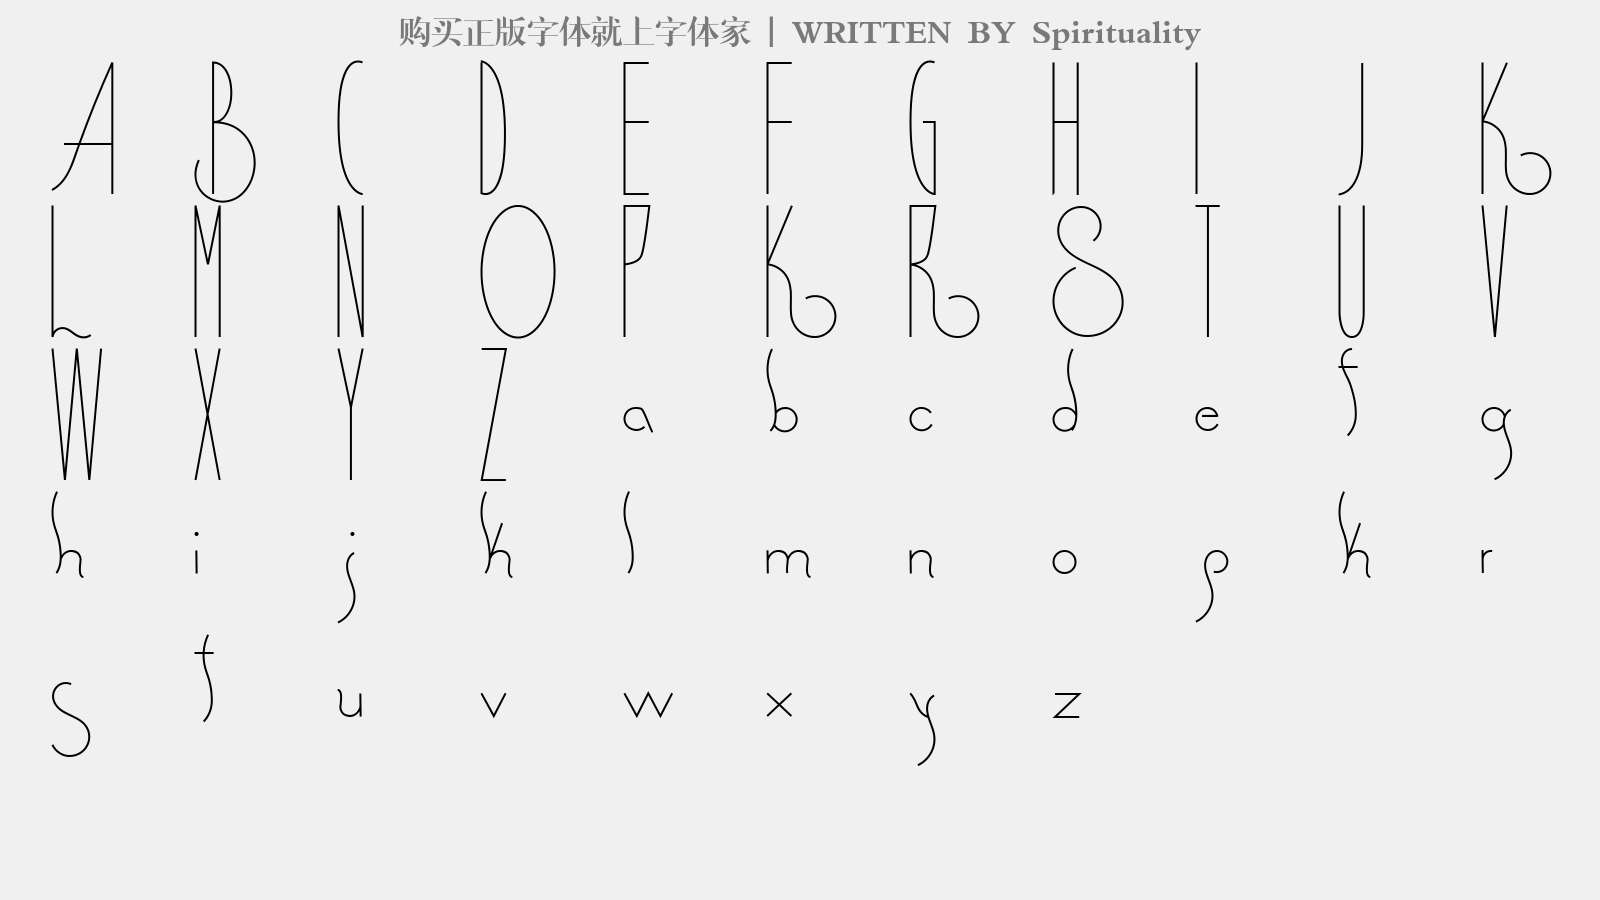 Spirituality - 大写字母/小写字母/数字